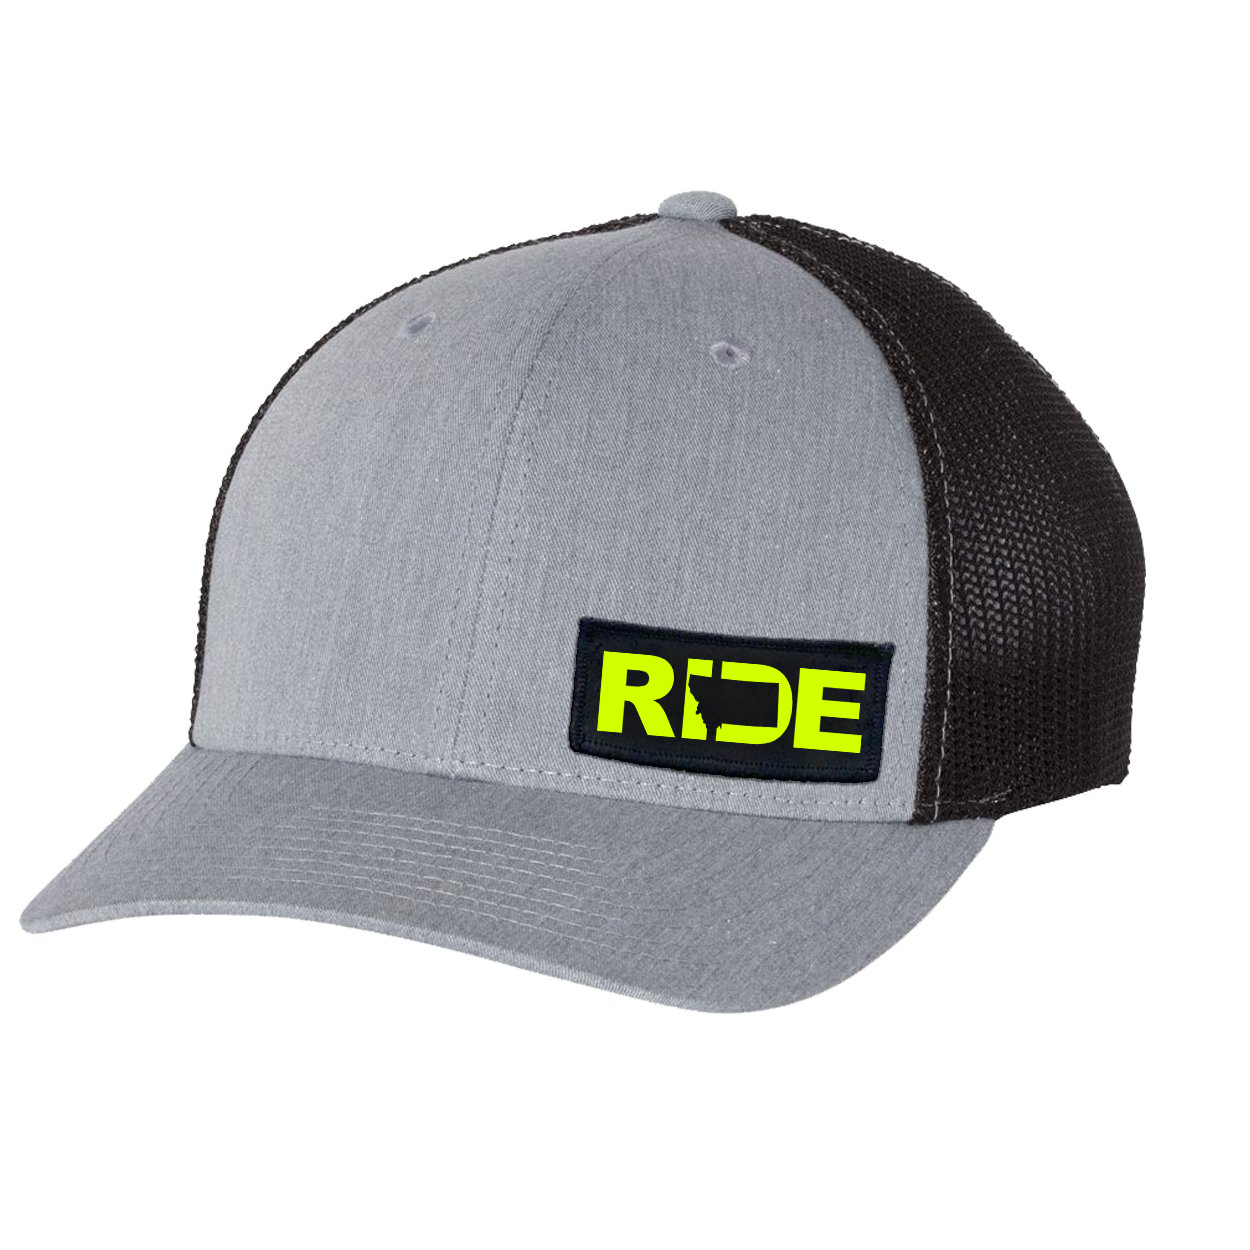 Ride Montana Night Out Woven Patch Flex-Fit Hat Heather Gray/Black (Hi-Vis Logo)